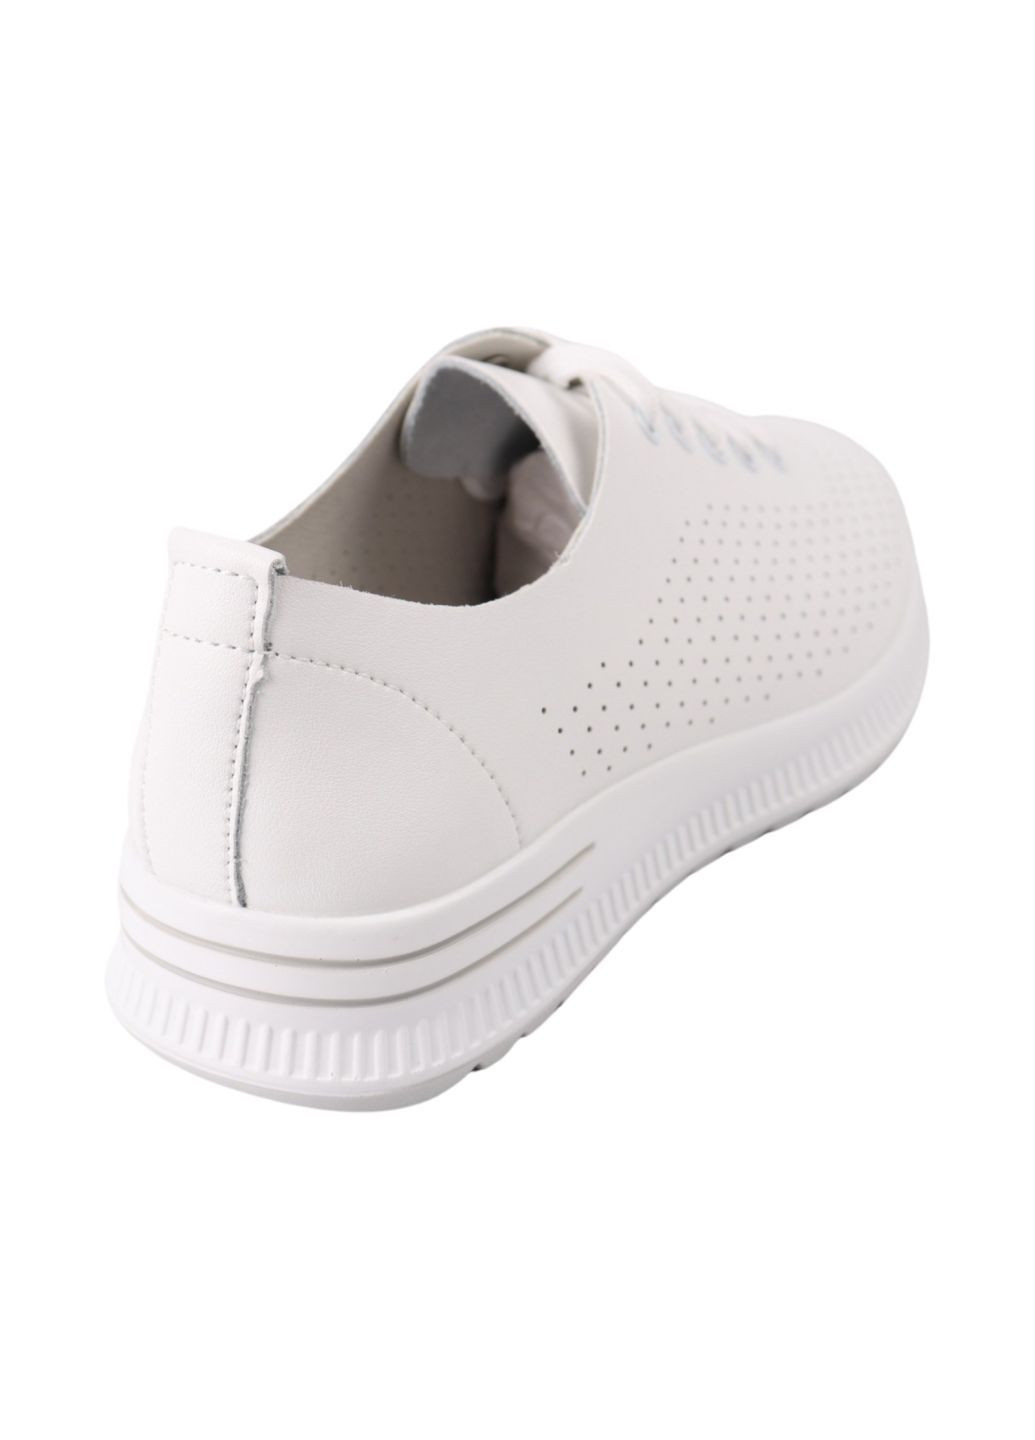 Білі кросівки жіночі білі натуральна шкіра Lifexpert 1590-24LTSP